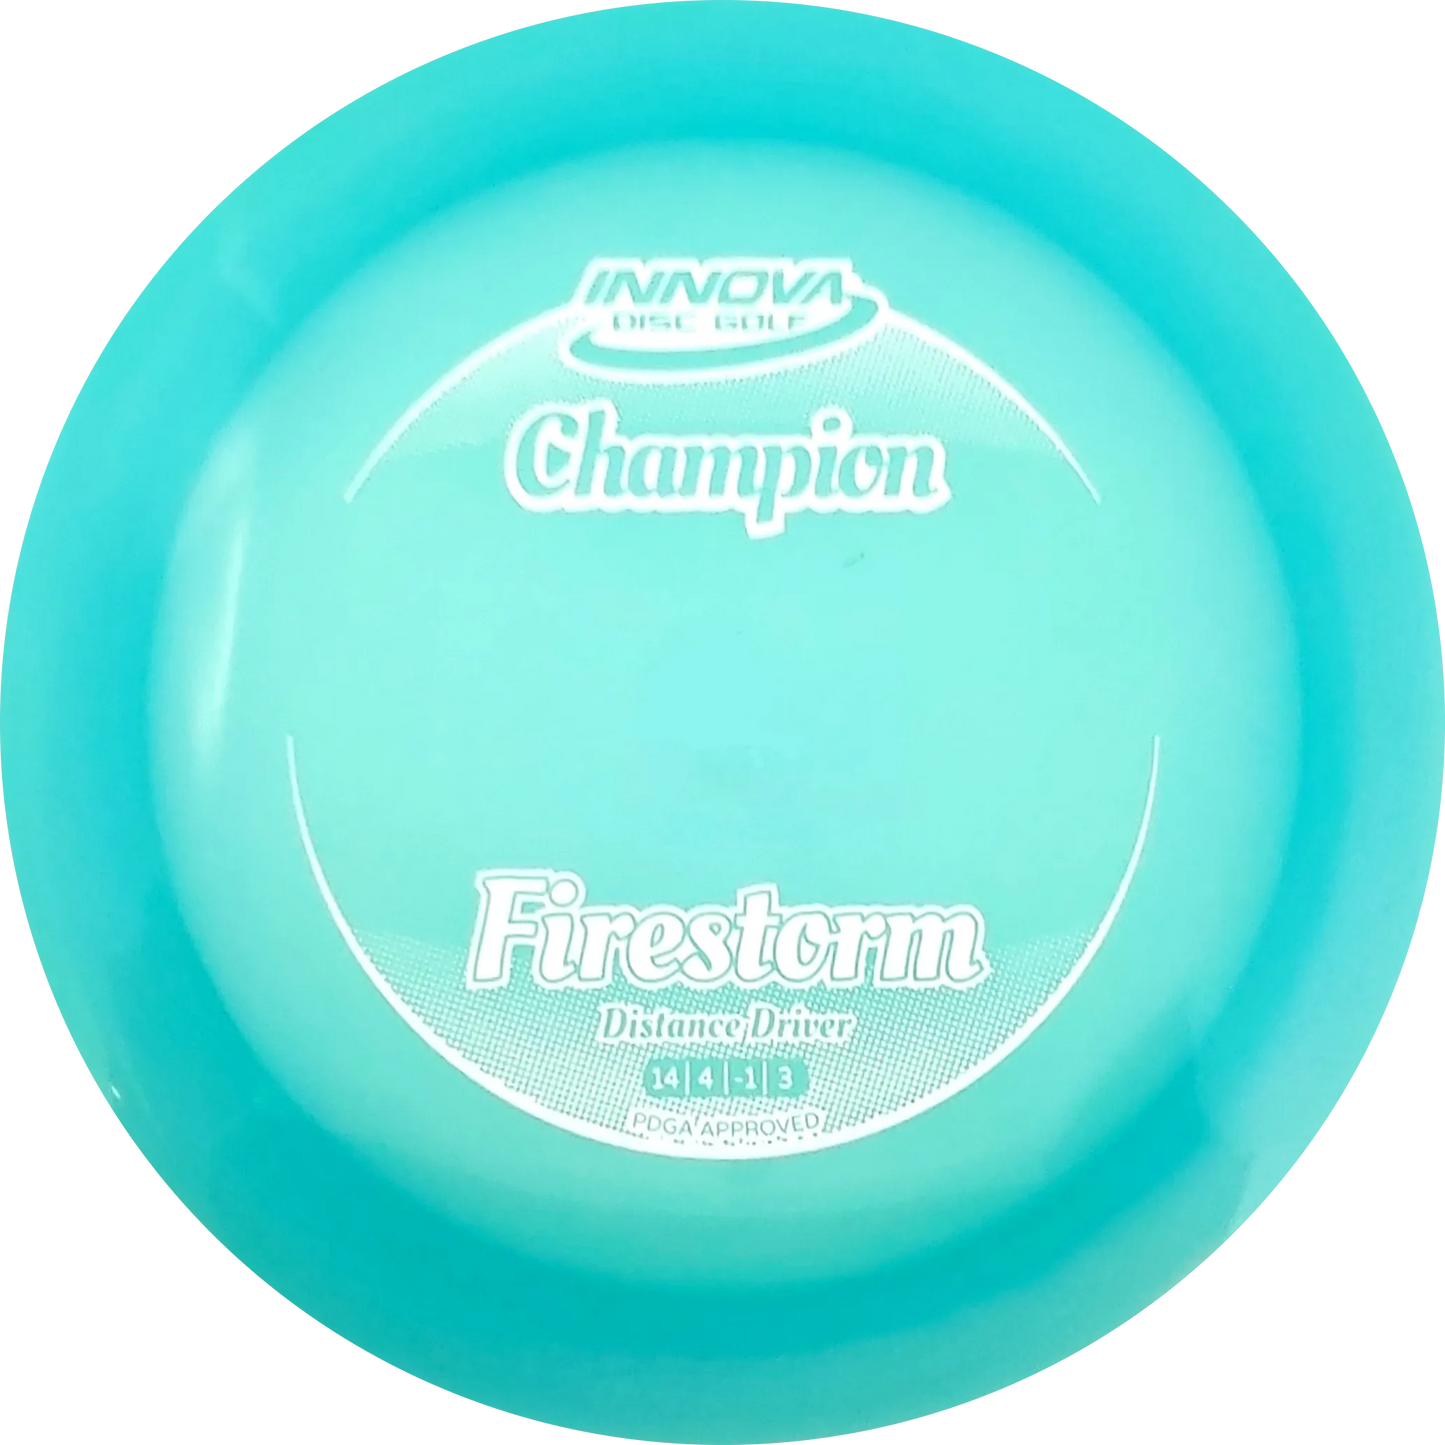 Champion Firestorm